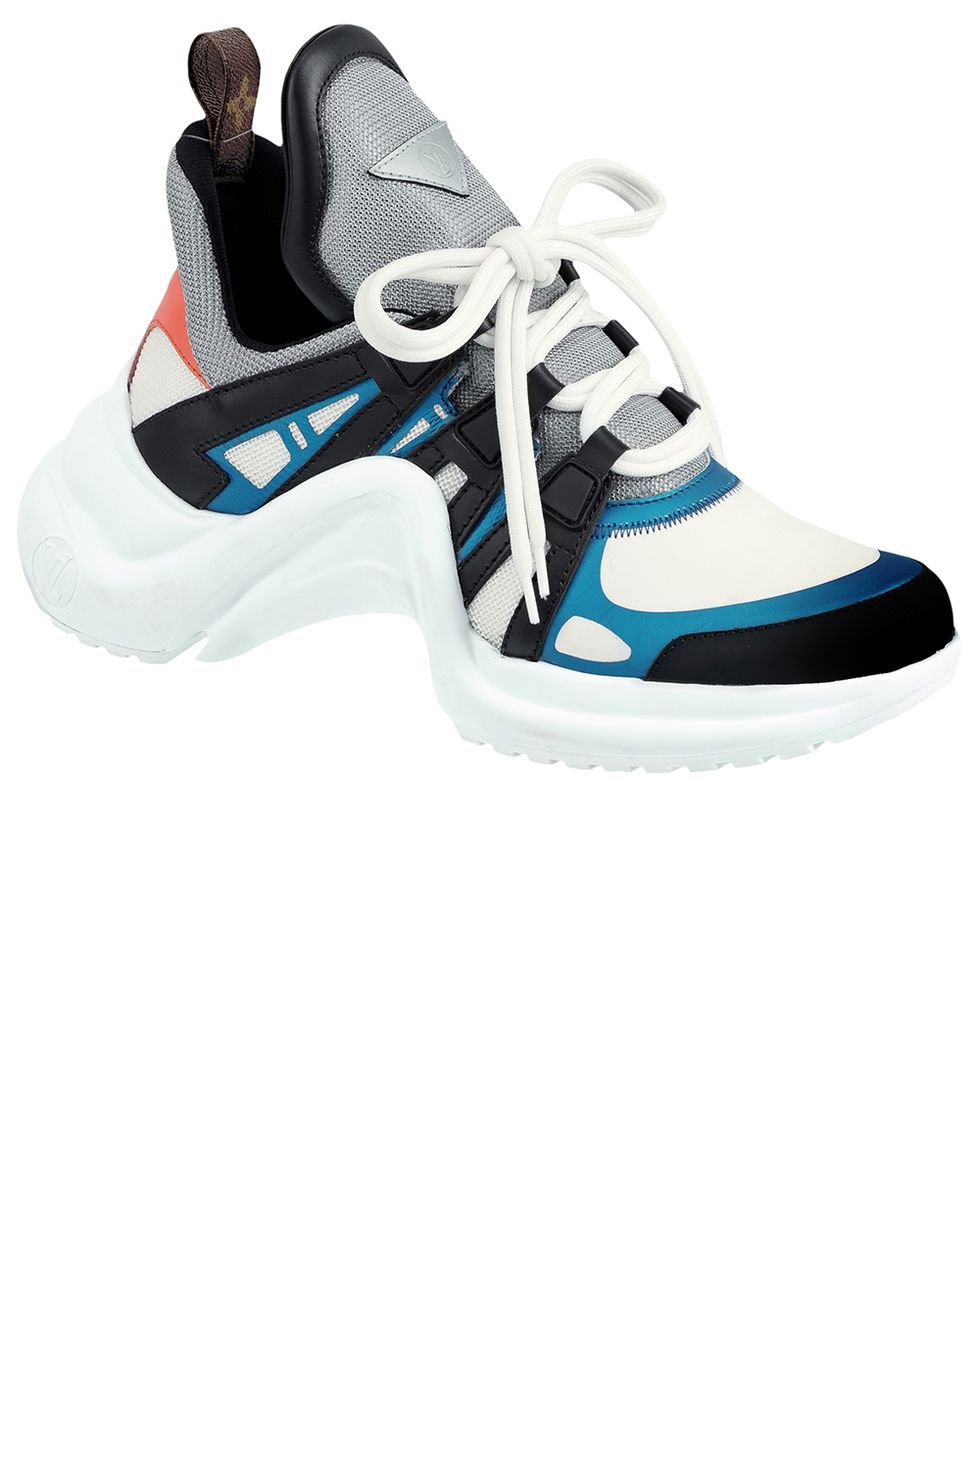 Shoe, Footwear, Sneakers, White, Turquoise, Aqua, Athletic shoe, Walking shoe, Basketball shoe, Outdoor shoe, 